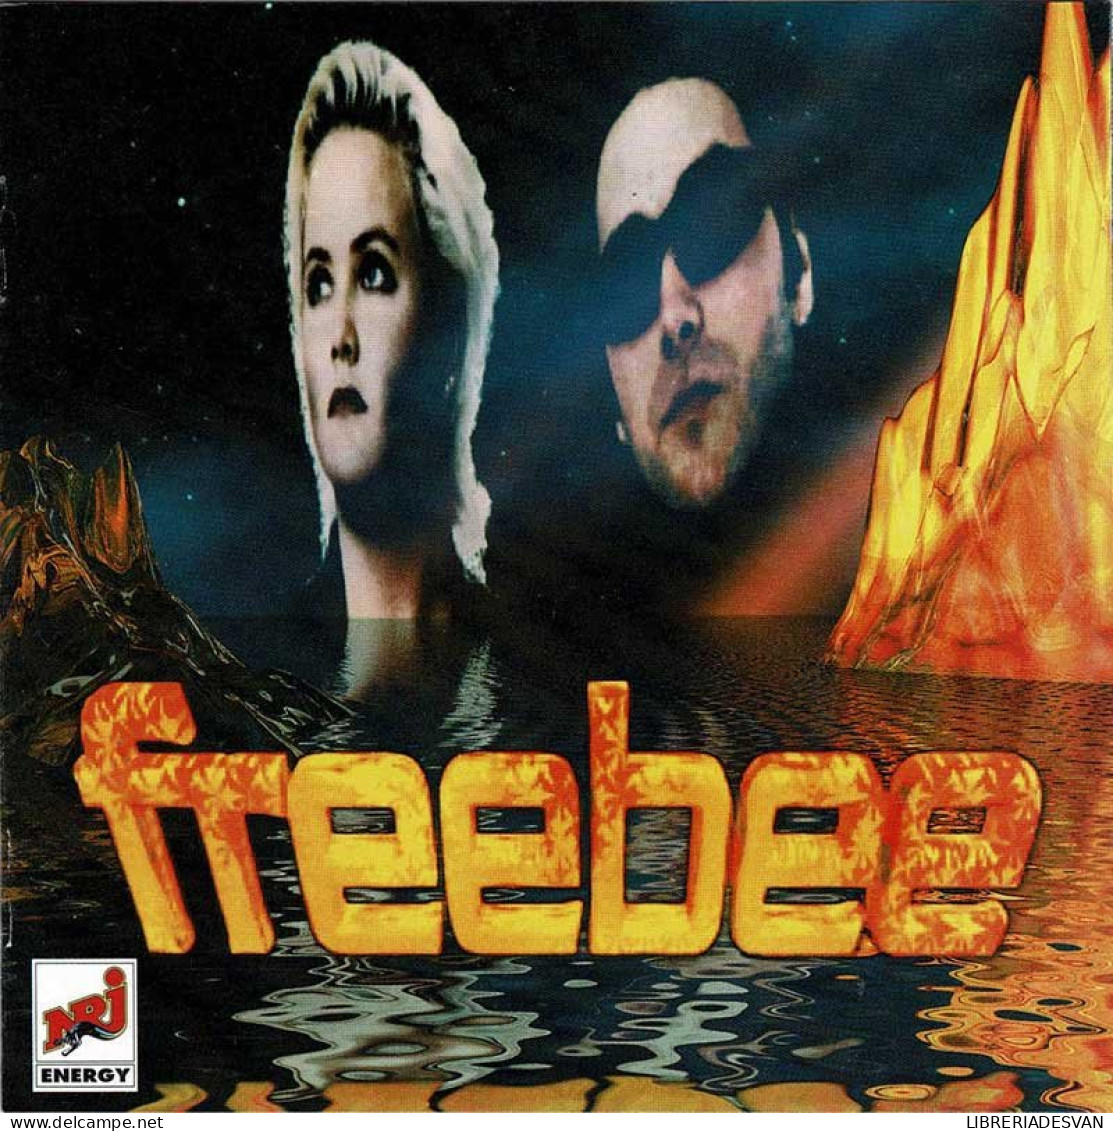 Freebee - Freebee. CD - Dance, Techno & House